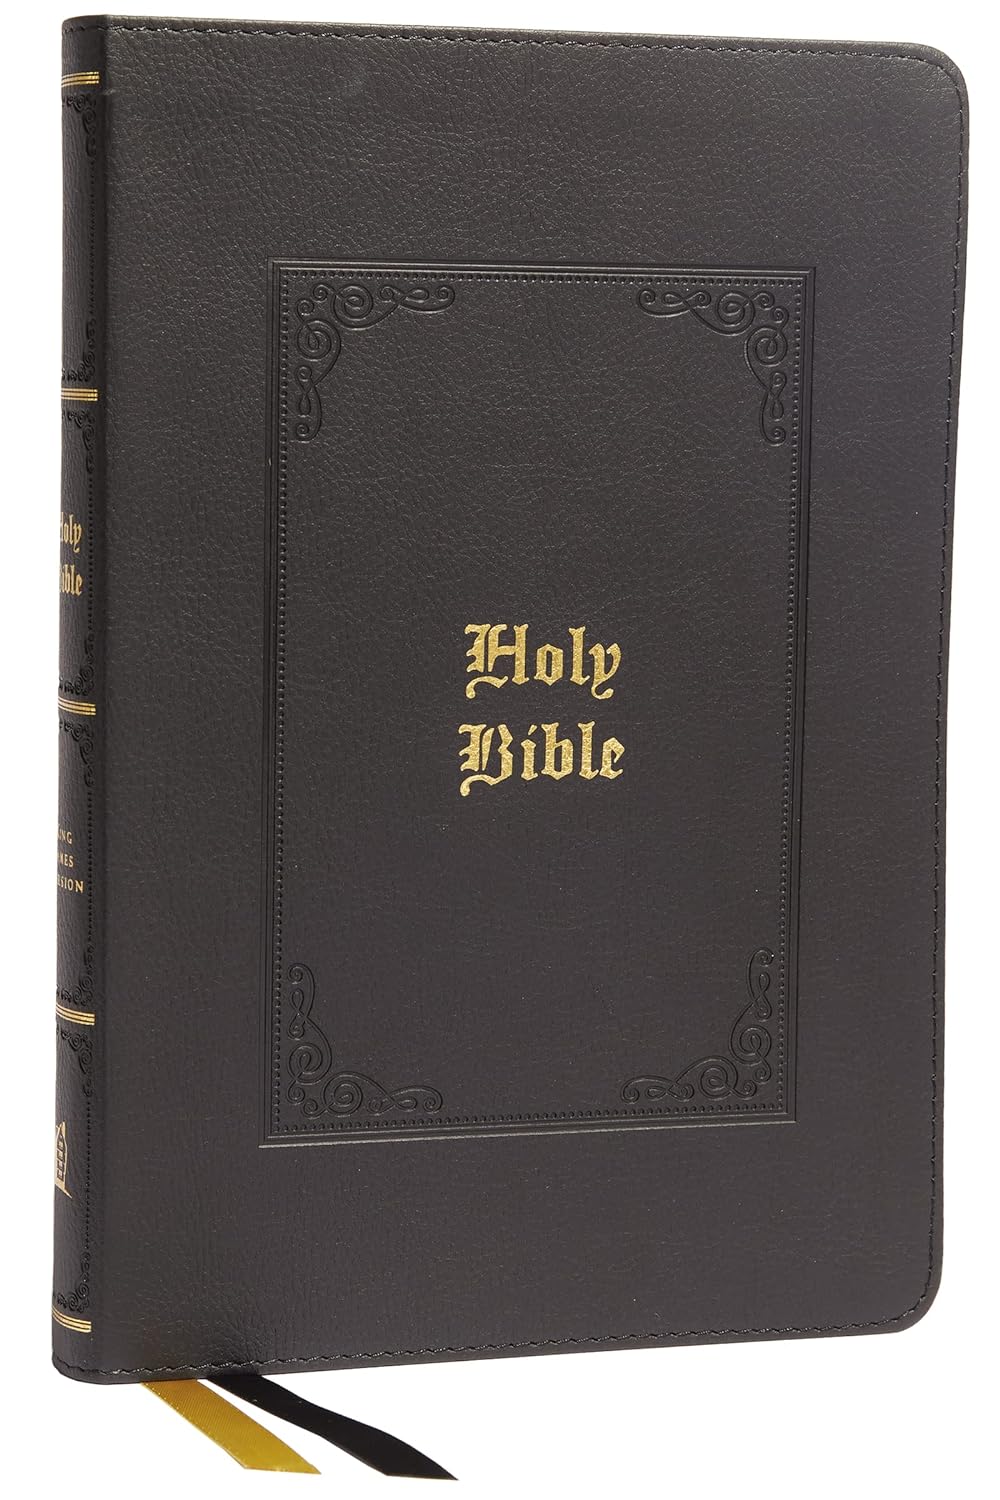 Bible KJV Thinline Large Print Black Leathersoft